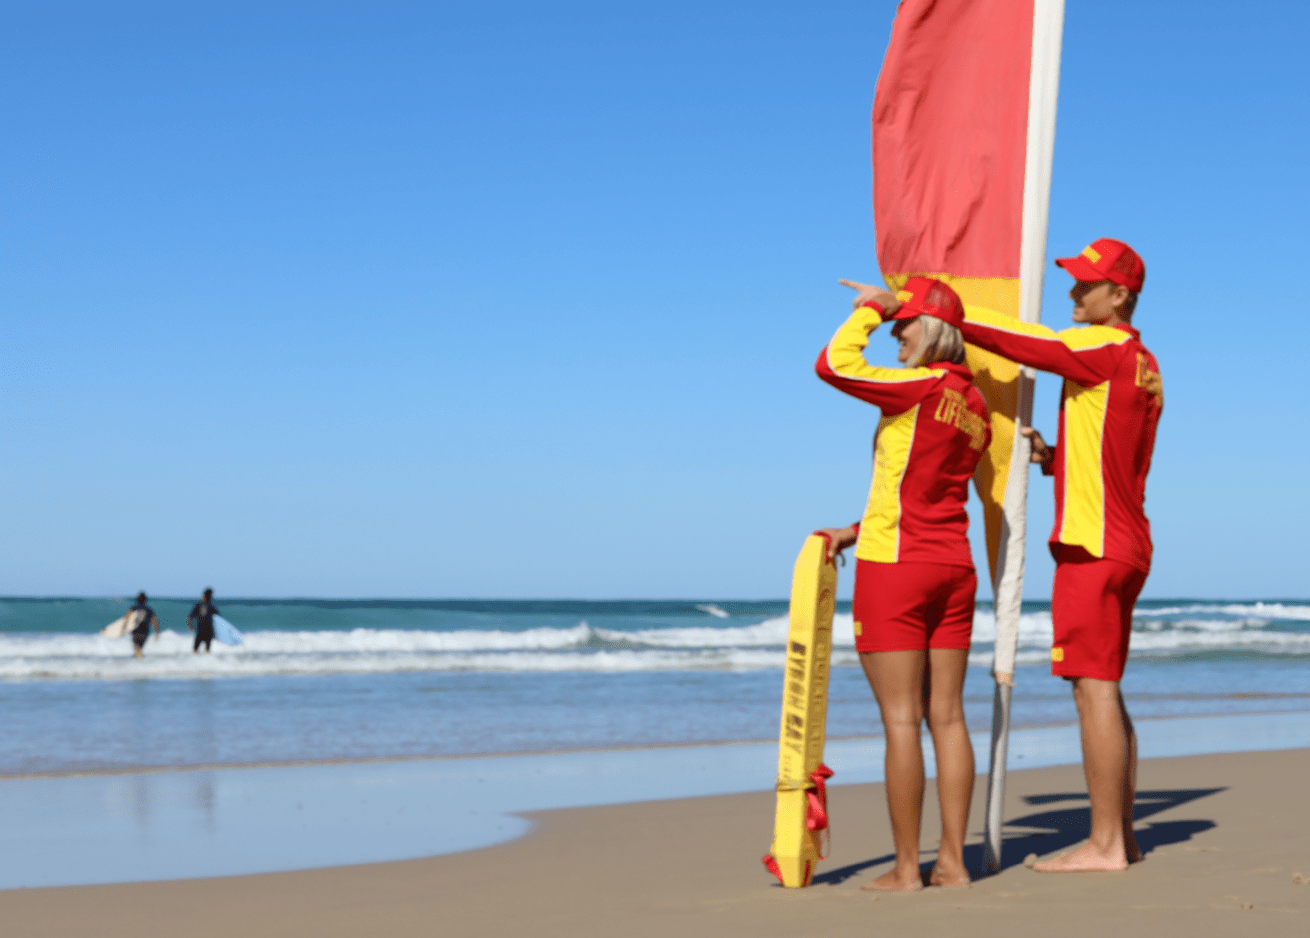 Soaking Up the Sun: My Summer as a Lifeguard